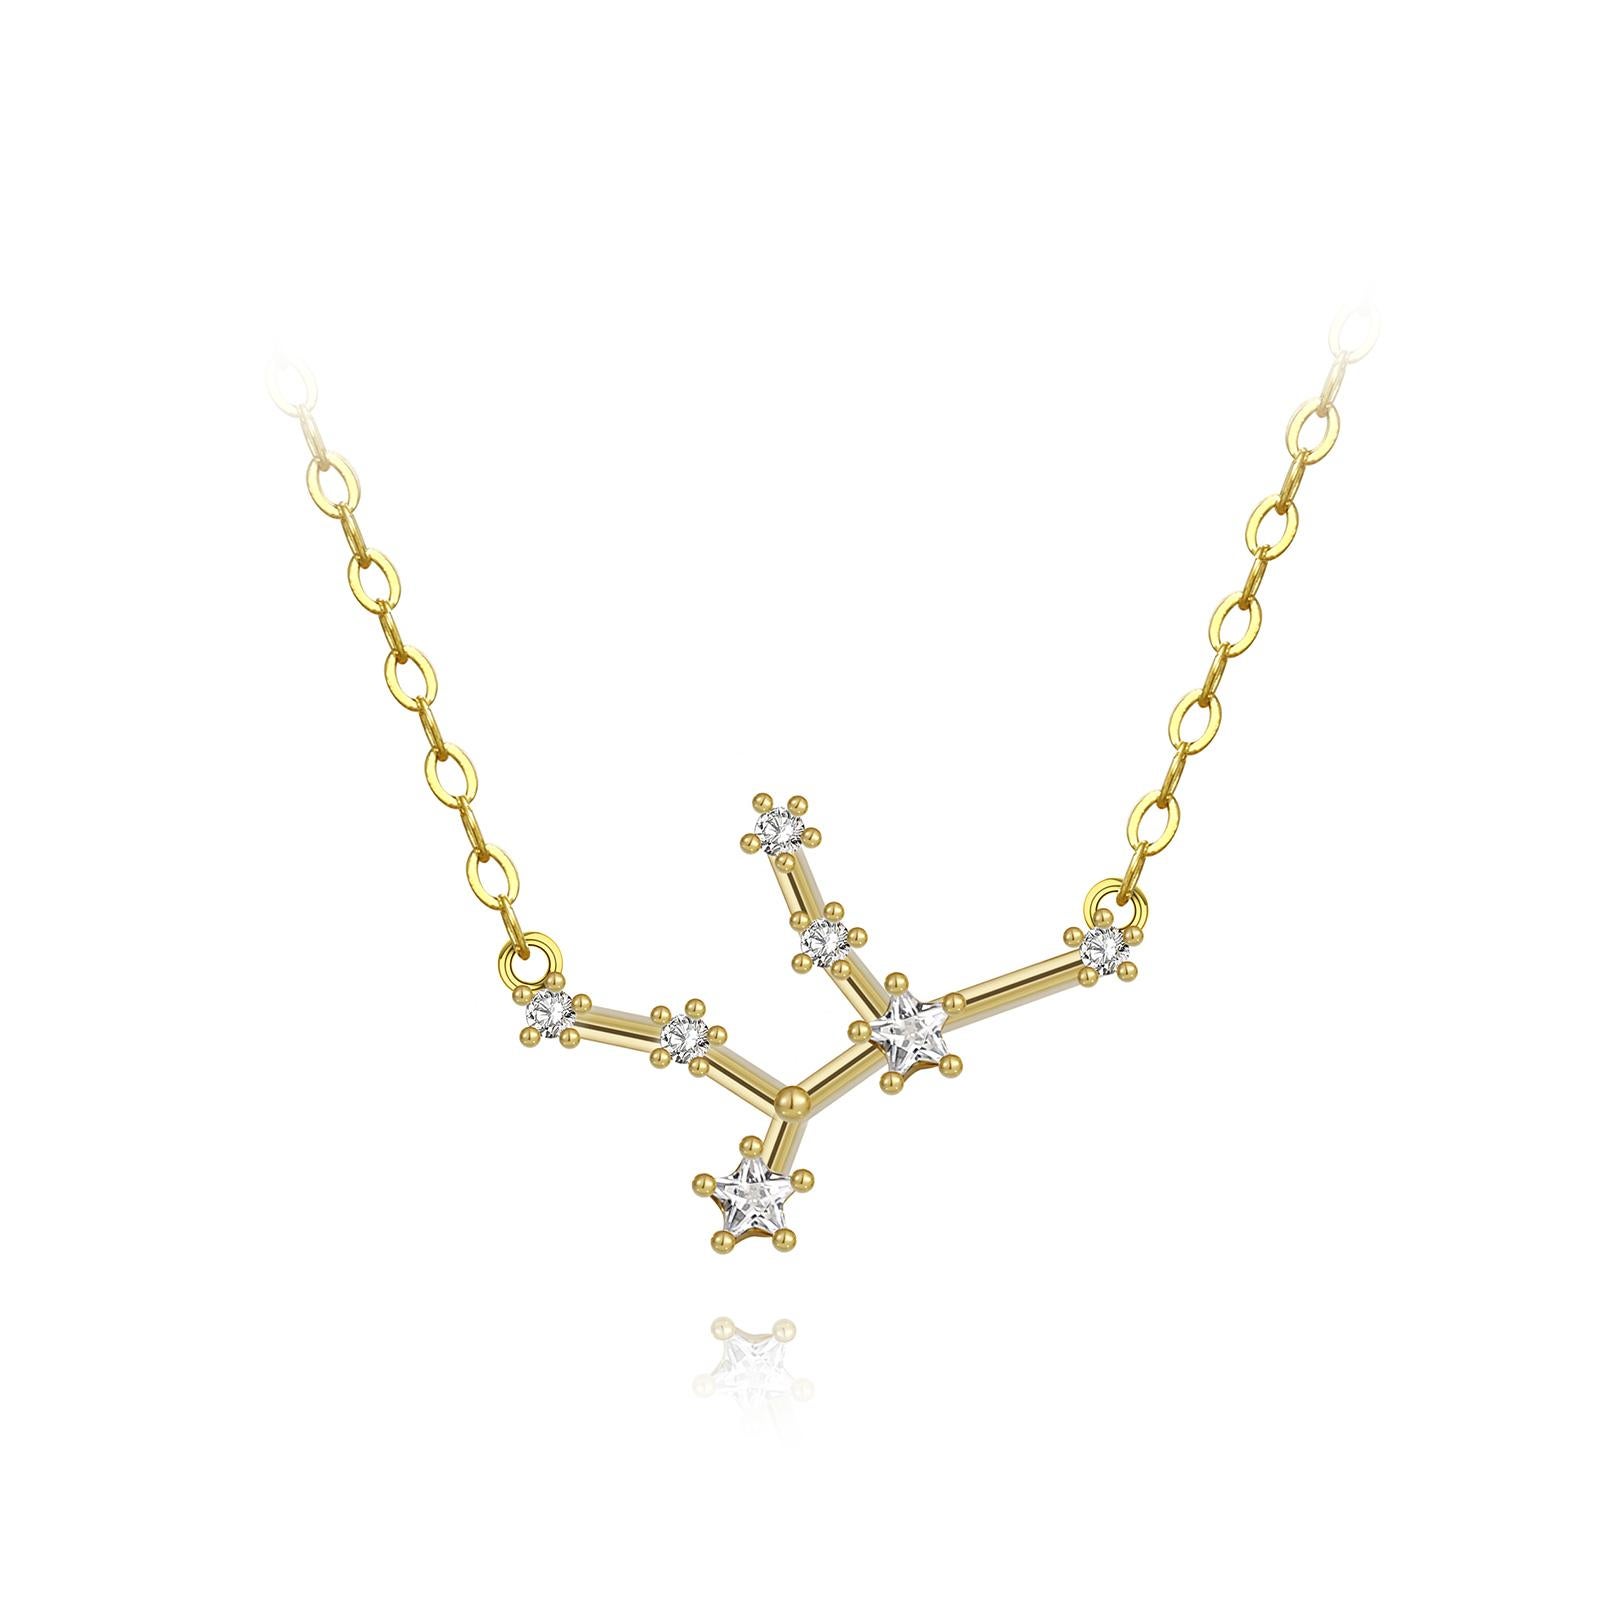 virgo constellation jewelry